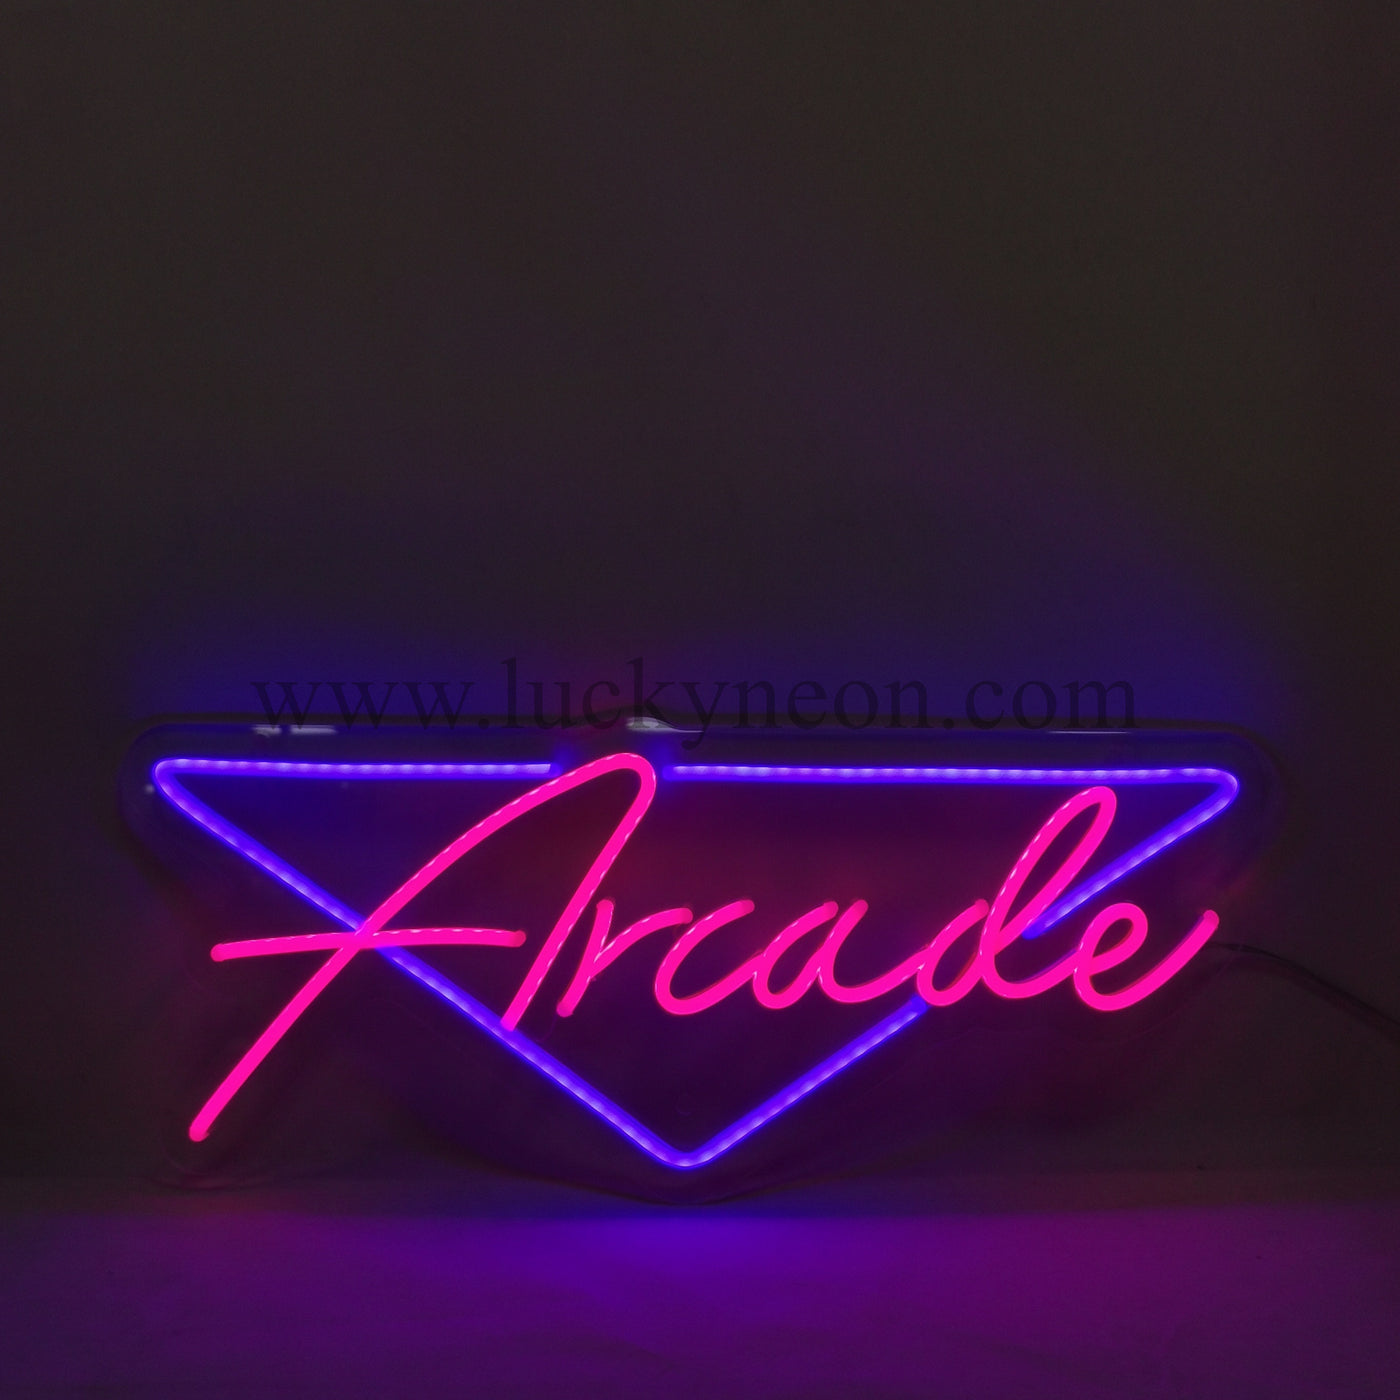 Arcade neon sign